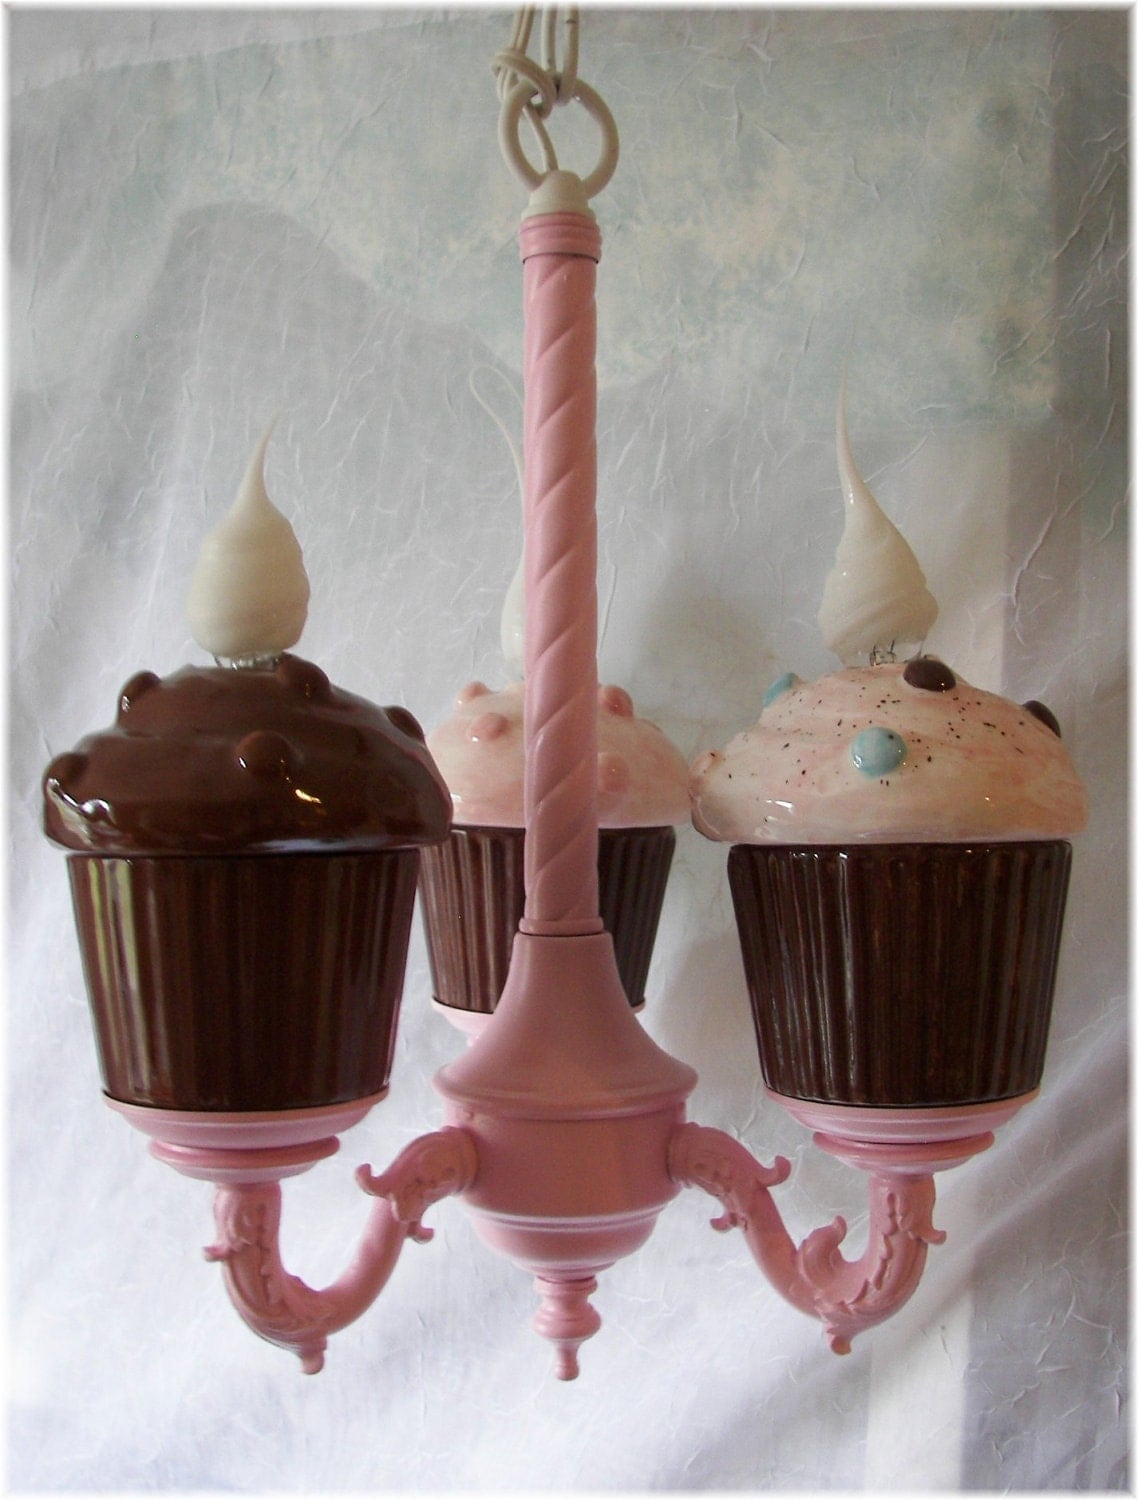 & cupcake flavors  Chandeliers Lights Pendant vintage